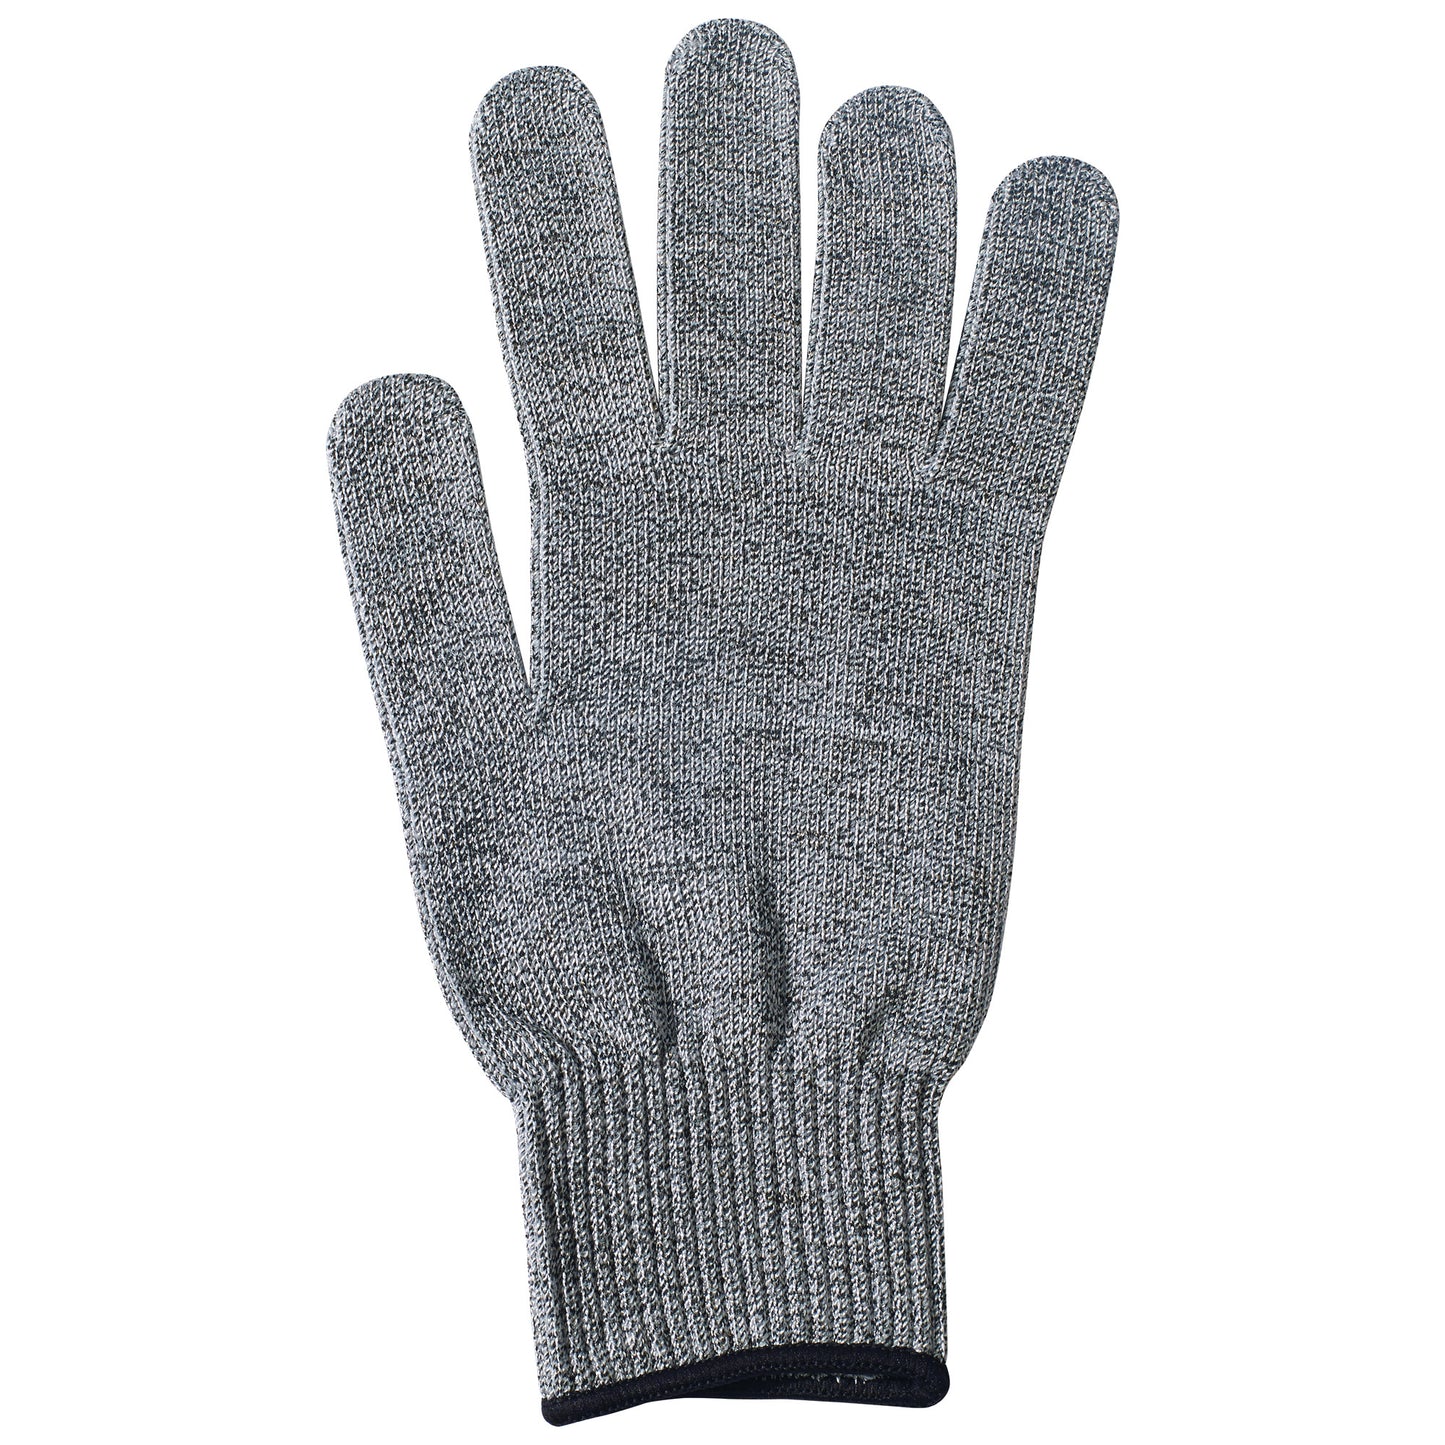 GCRA-XL - Anti-Microbial Cut Resistant Glove - X-Large